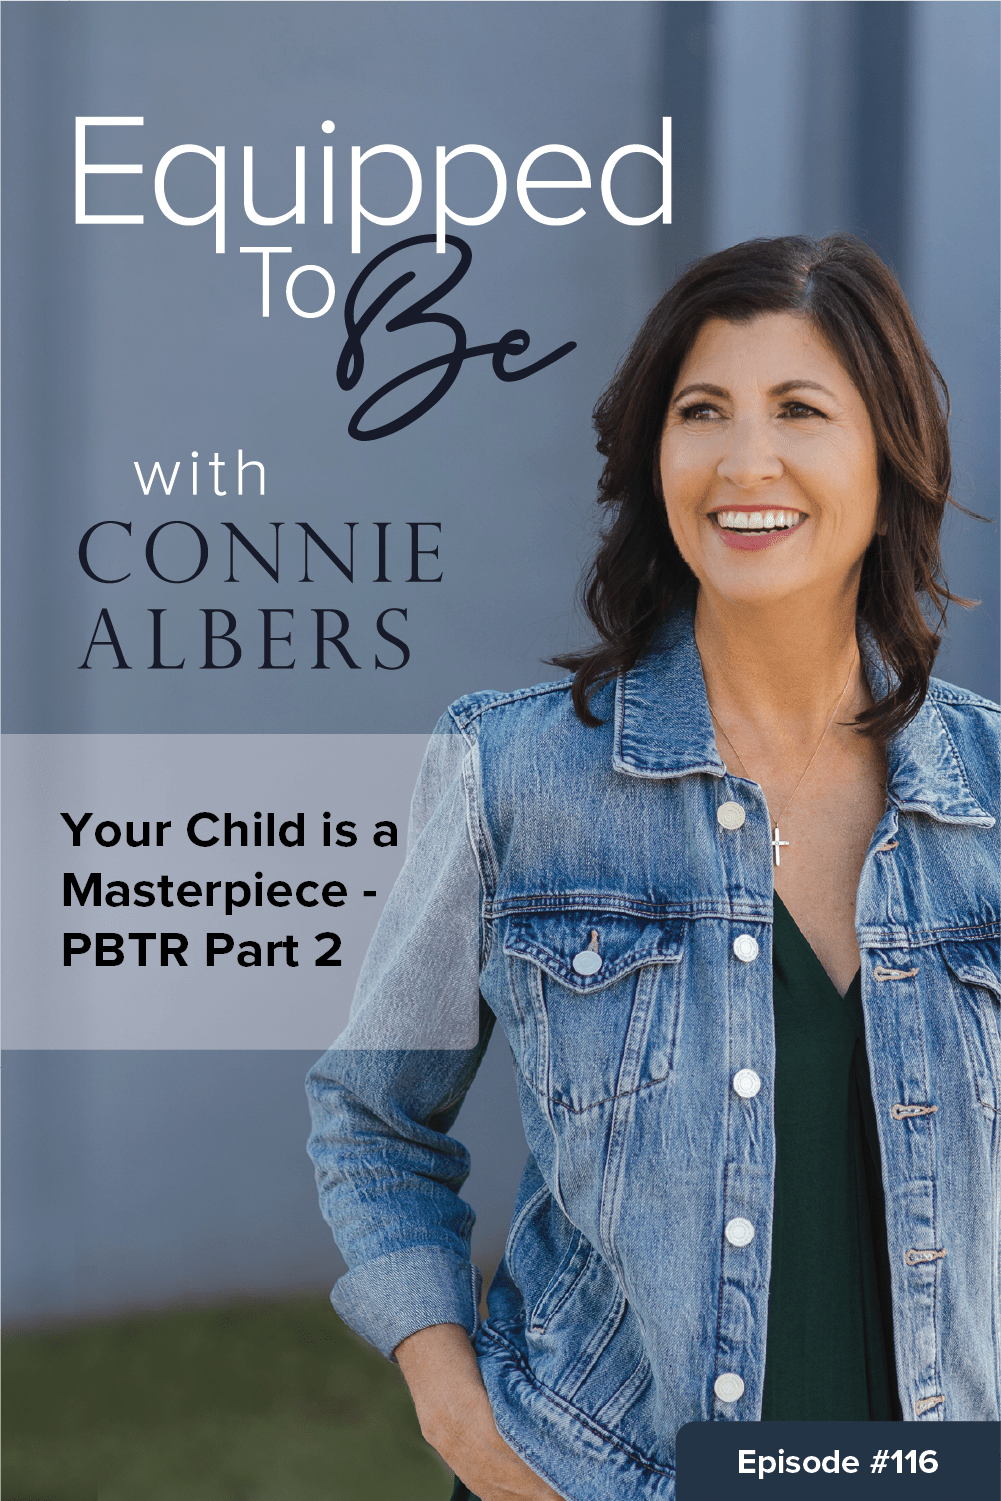 Your Child is a Masterpiece (PBTR Part 2) - ETB #116